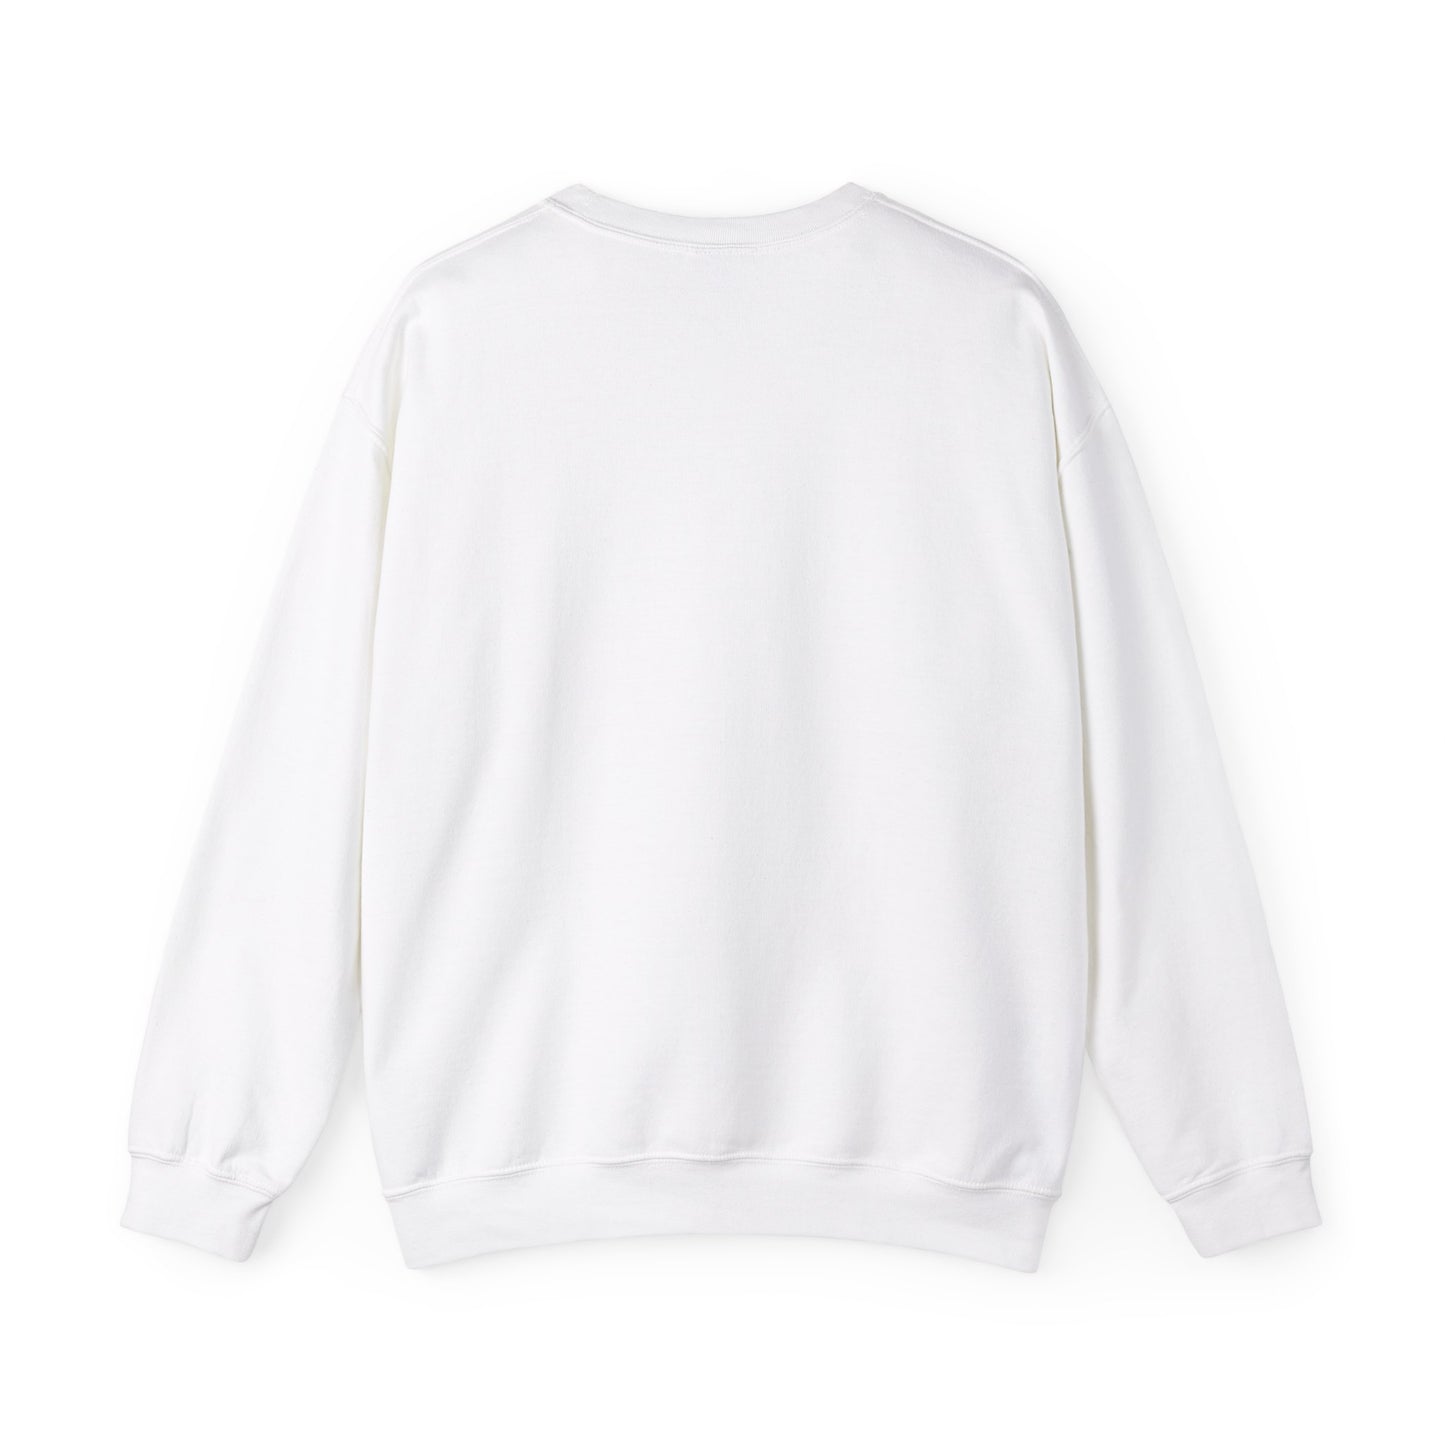 Hollywood White Crewneck Sweatshirt